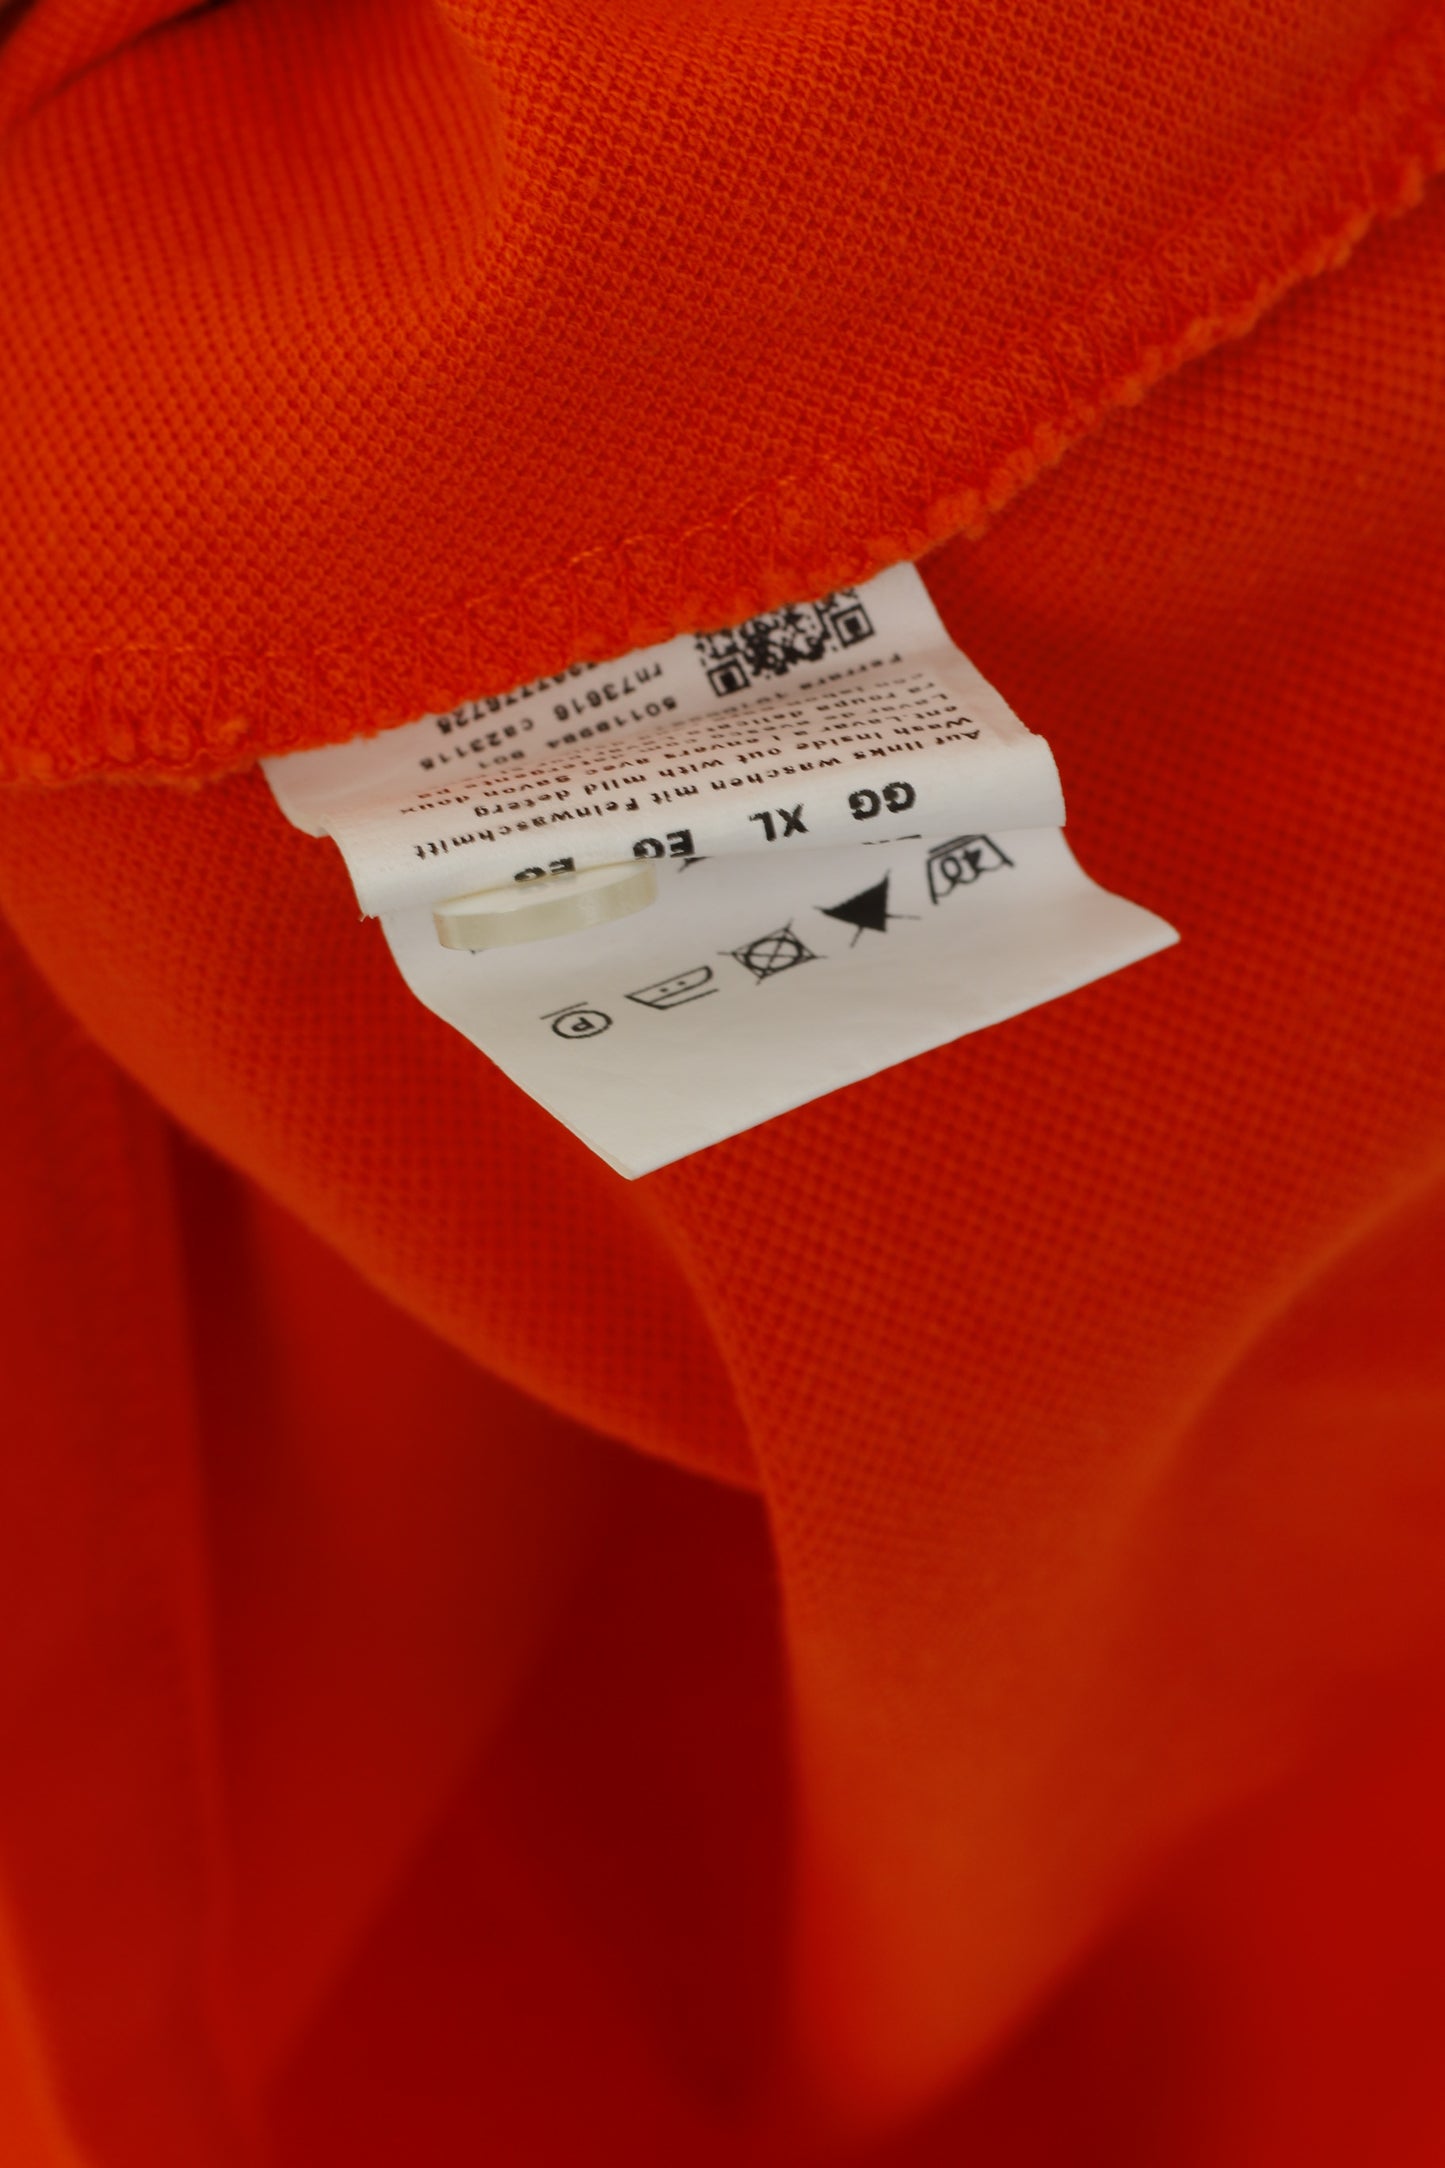 Hugo Boss Men S Polo Shirt Orange Cotton Detailed Buttons Classic Plain Top